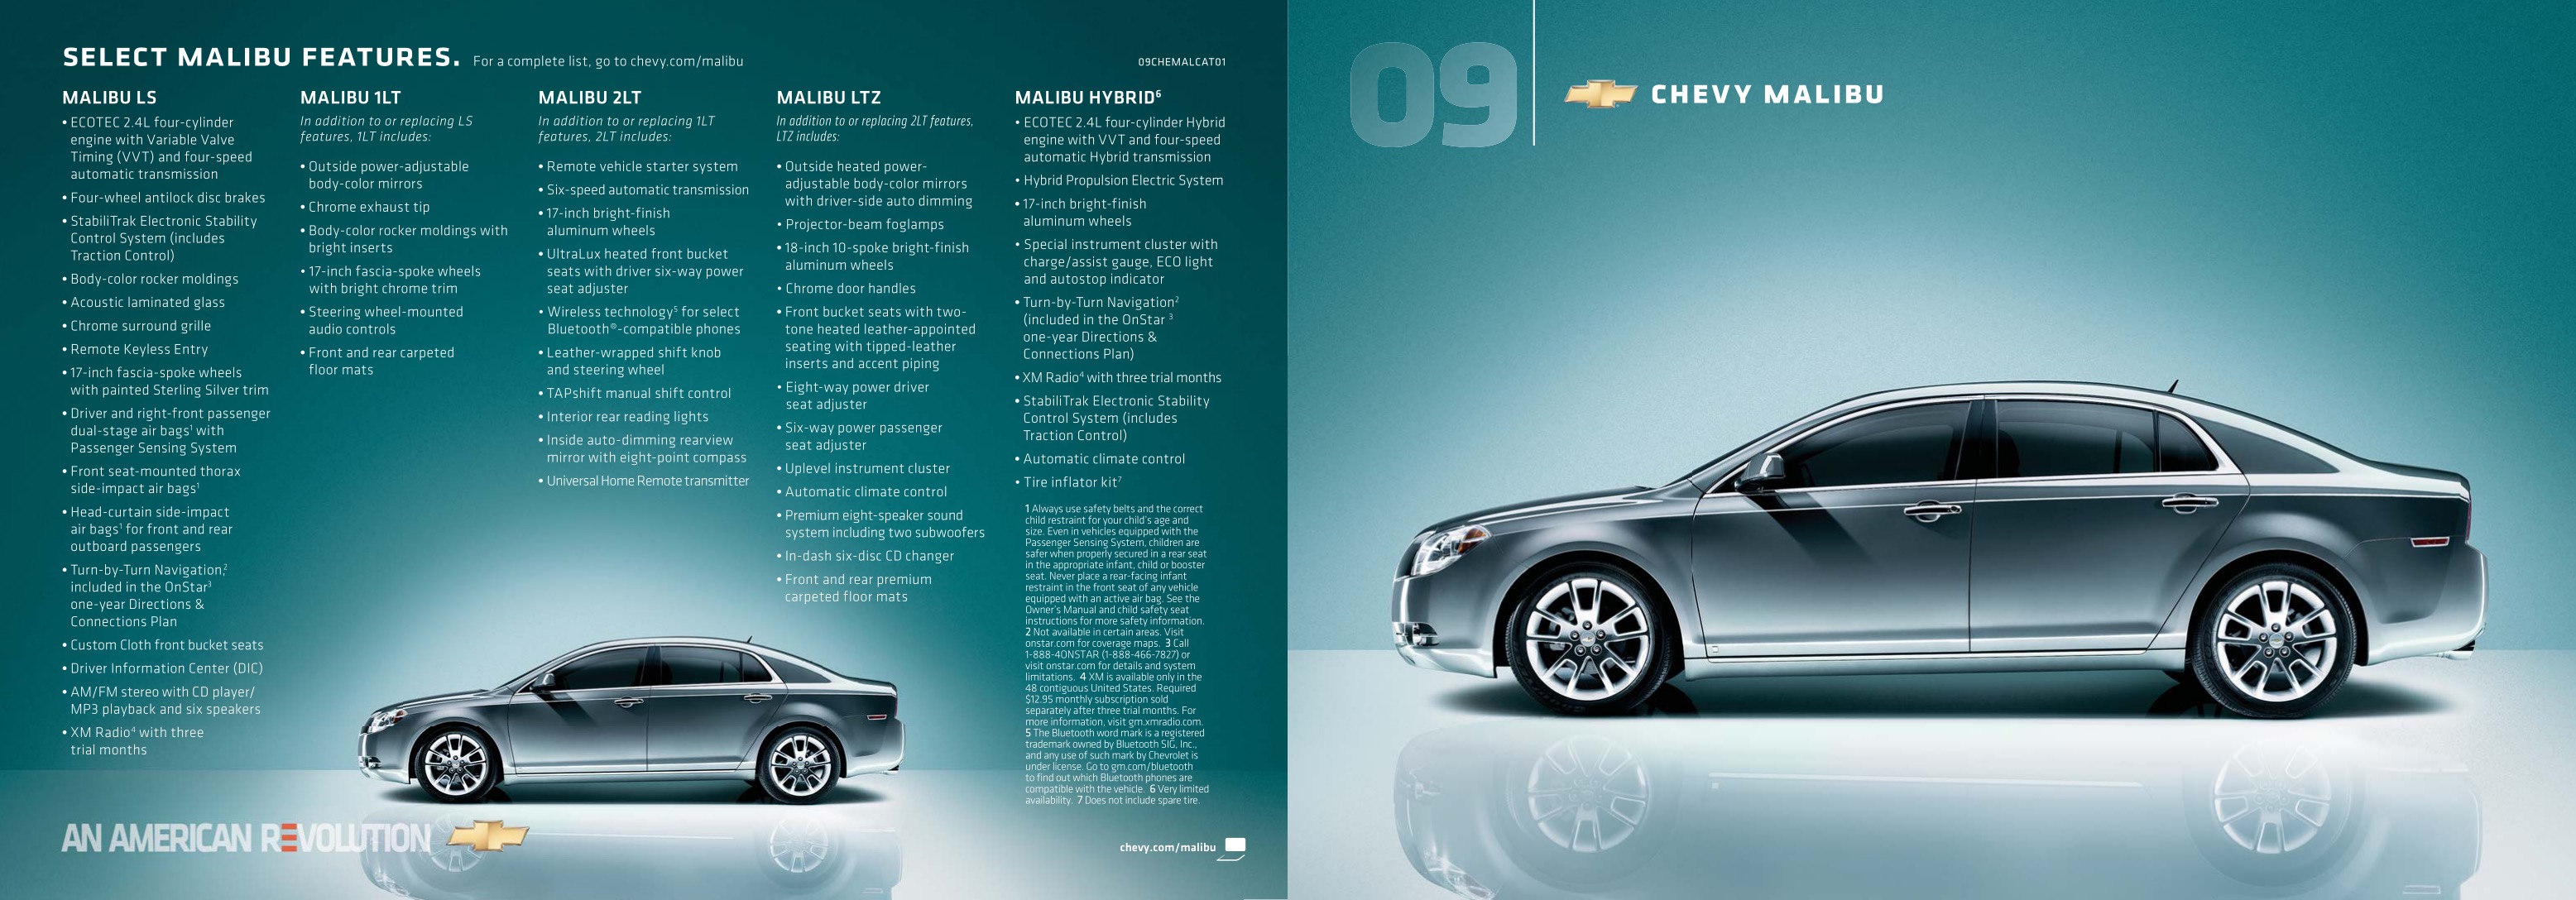 2009 Chevrolet Malibu Brochure